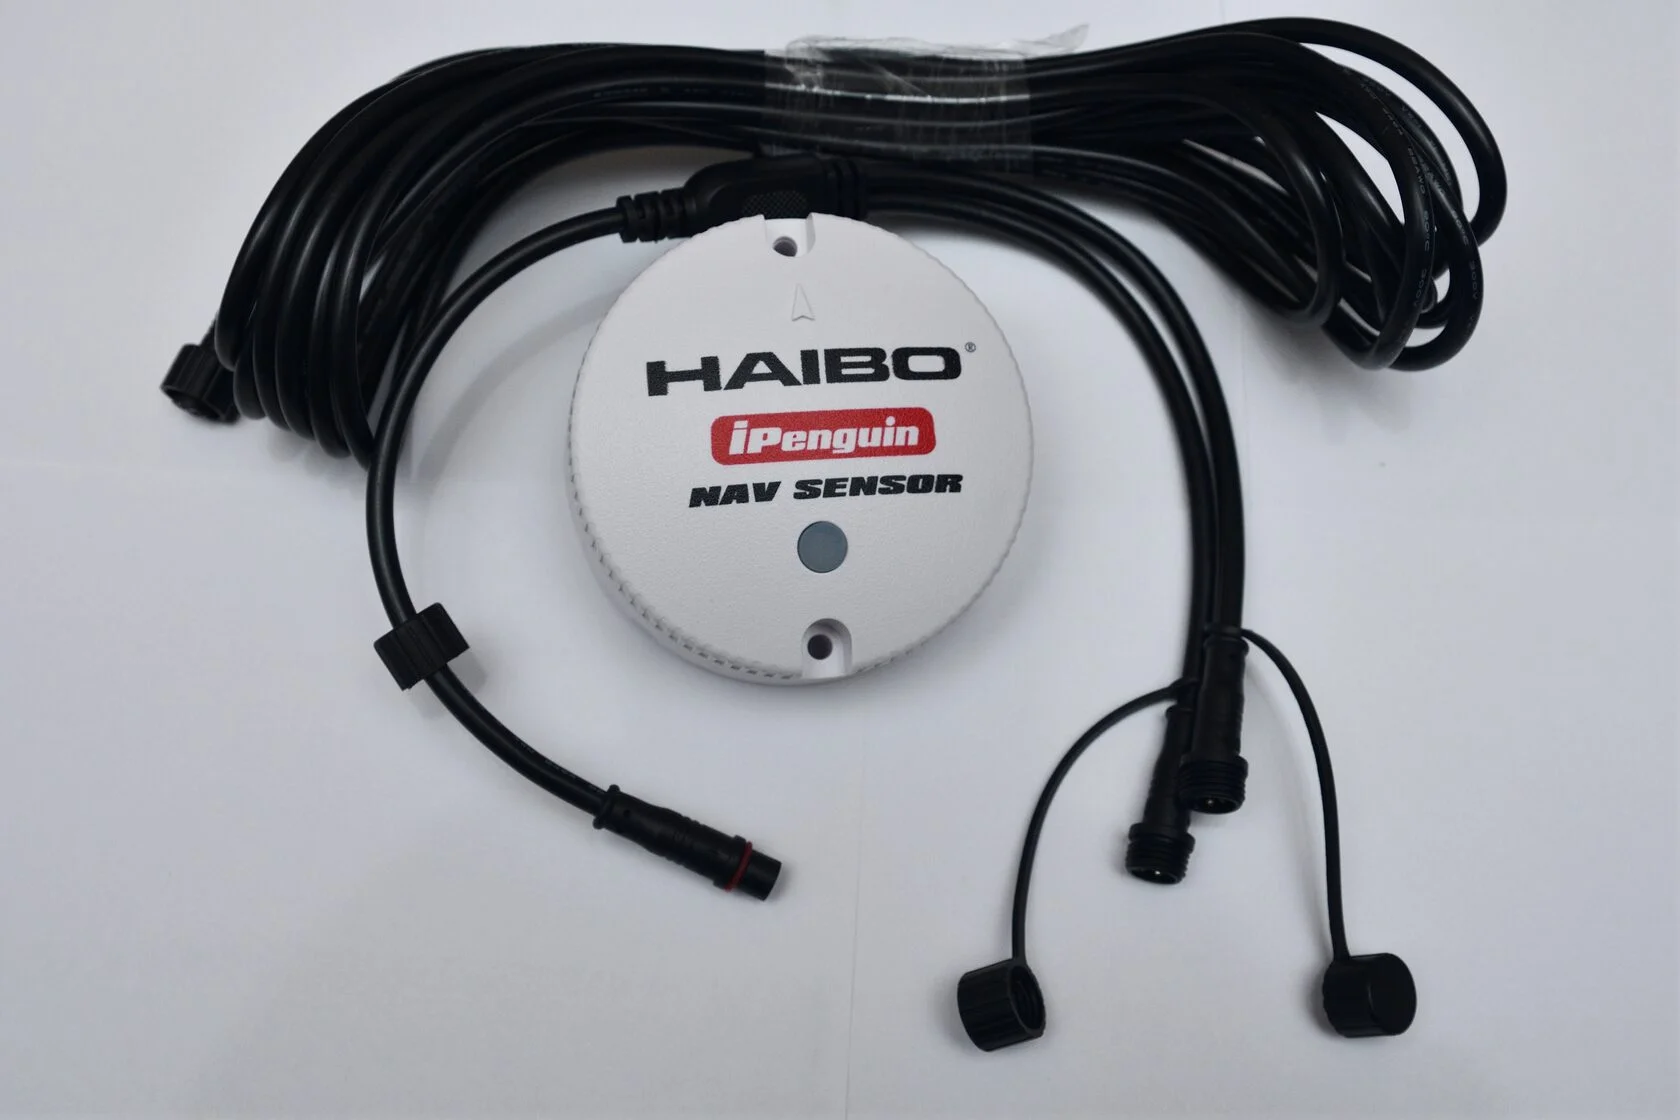 Haibo 12v. Haibo IPENGUIN p65 GPS. Электромотор Haibo IPENGUIN p65. Хайбо Электромотор для лодки GPS. Haibo p65 12v 53”.